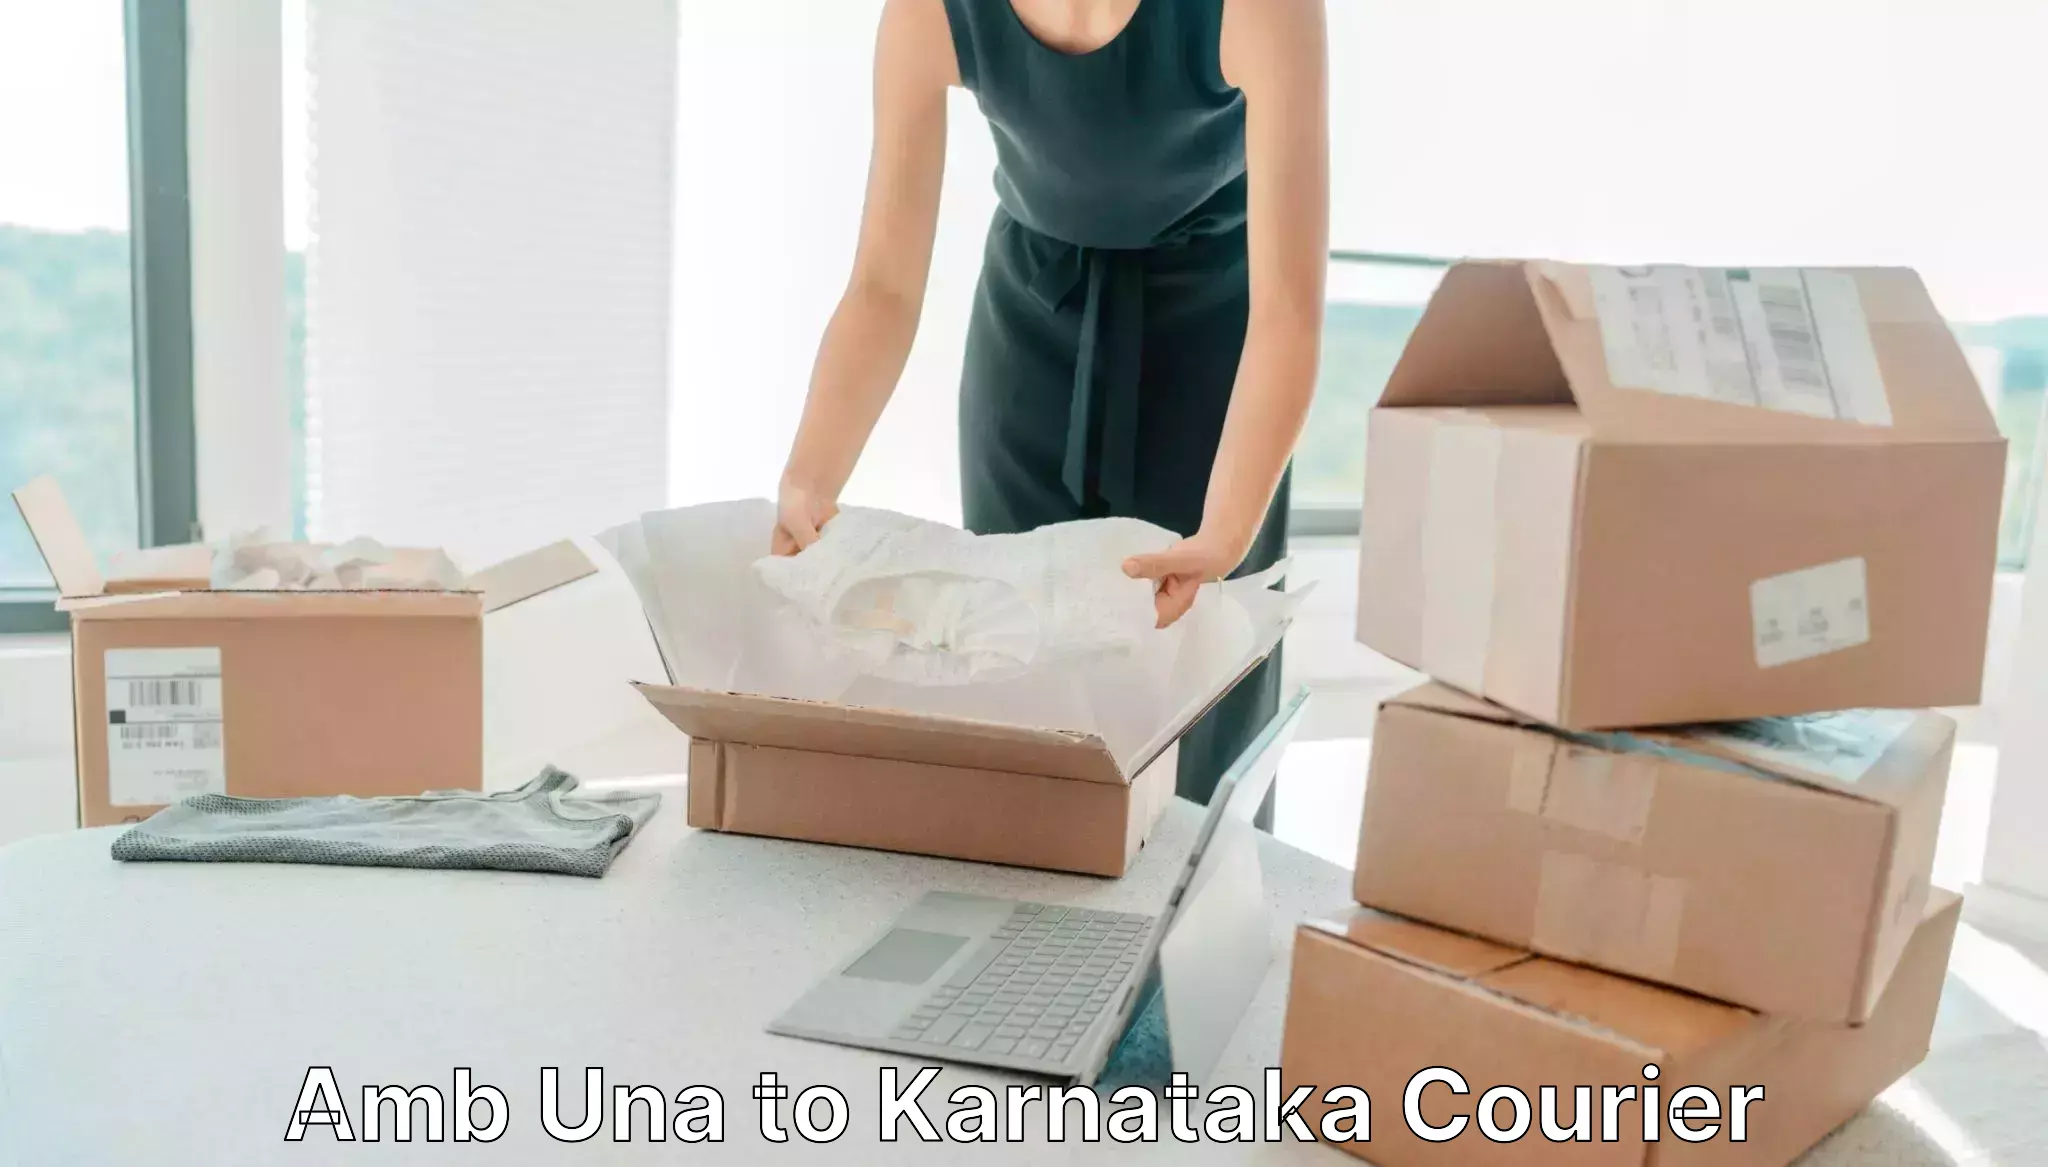 Flexible delivery schedules Amb Una to Karnataka